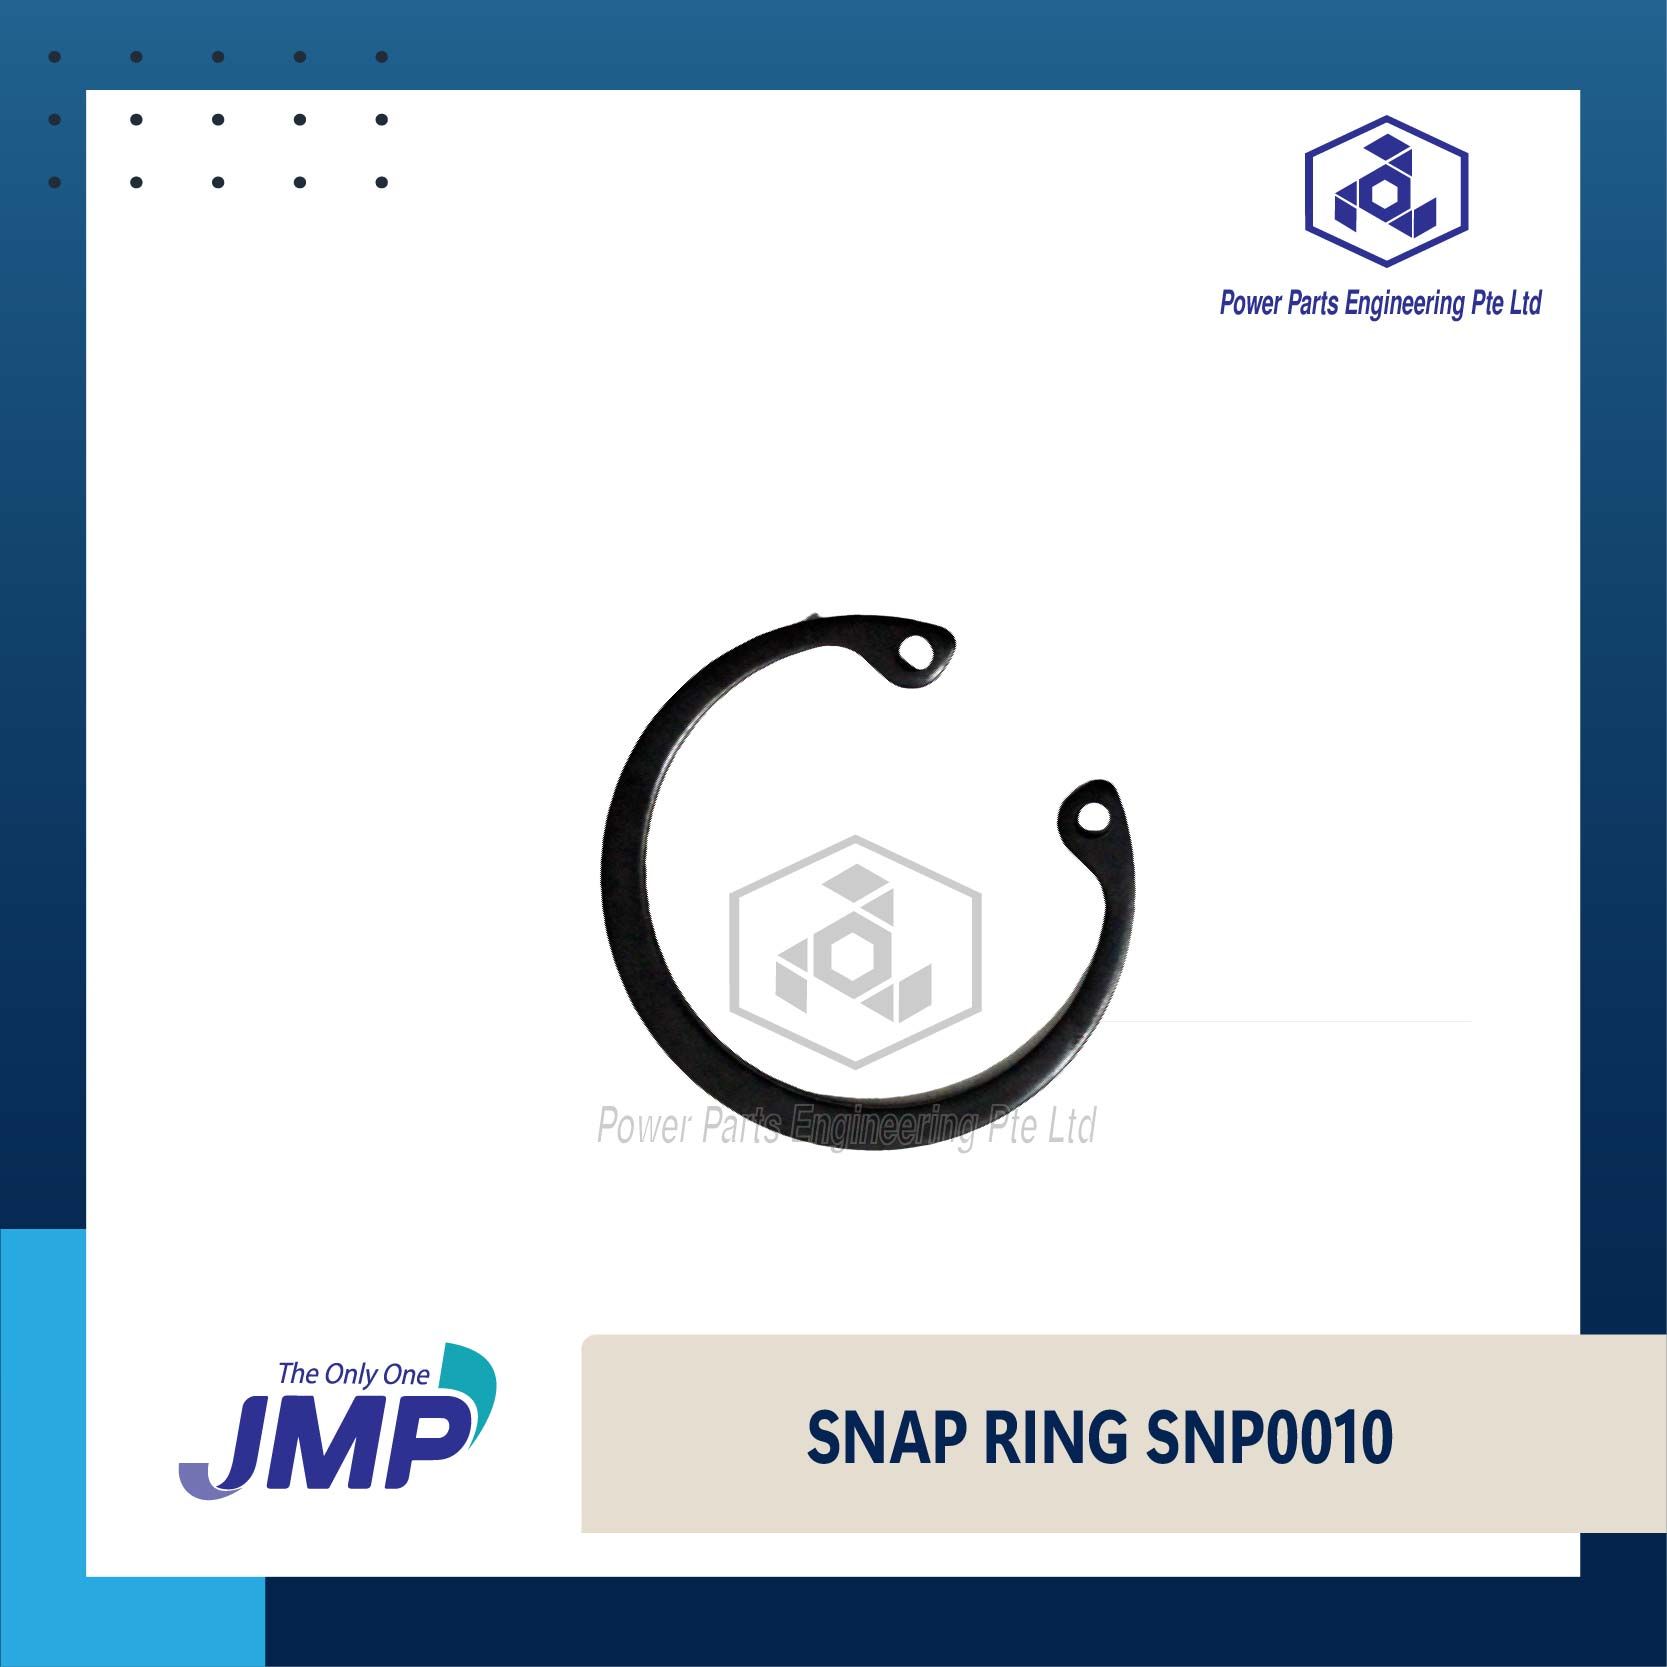 JMP SNP0010 SNAP RING